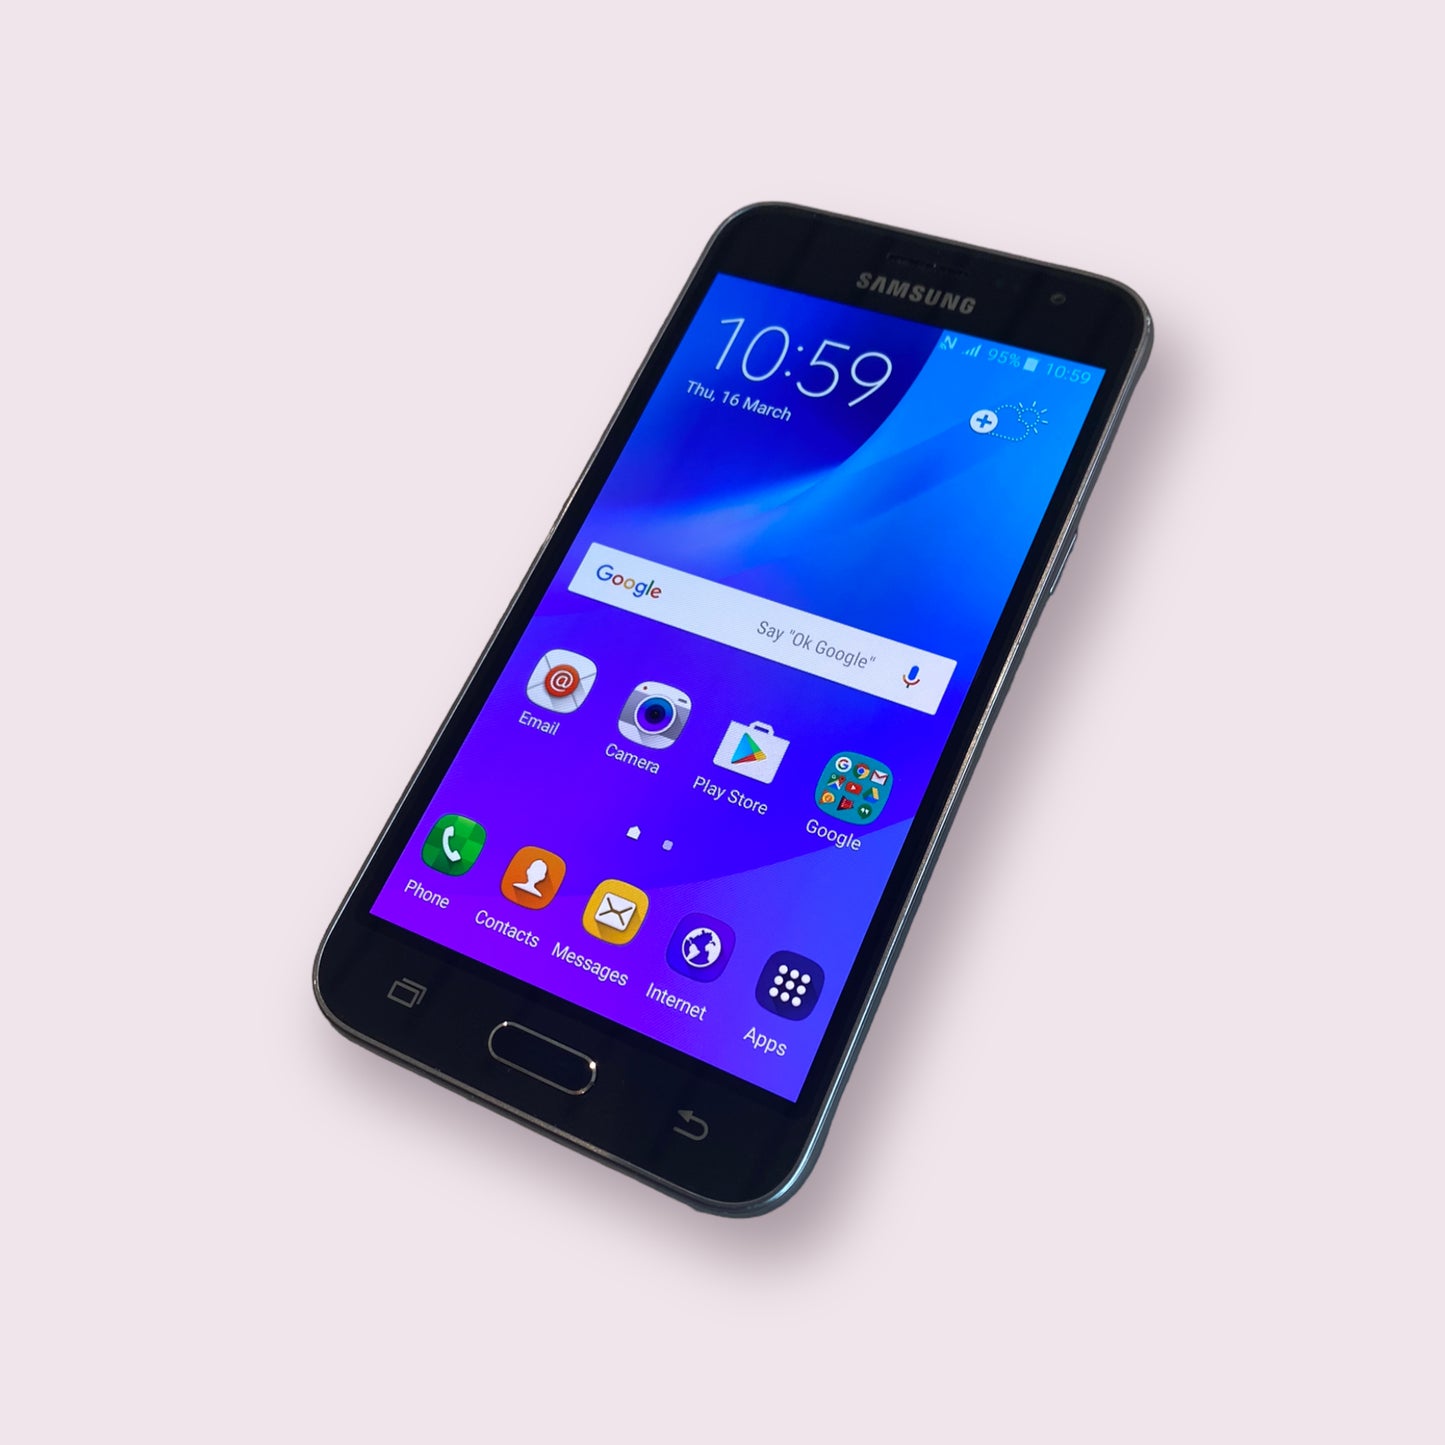 Samsung Galaxy J3 6 2016 SM-J320 8GB black smartphone - O2 - Grade B